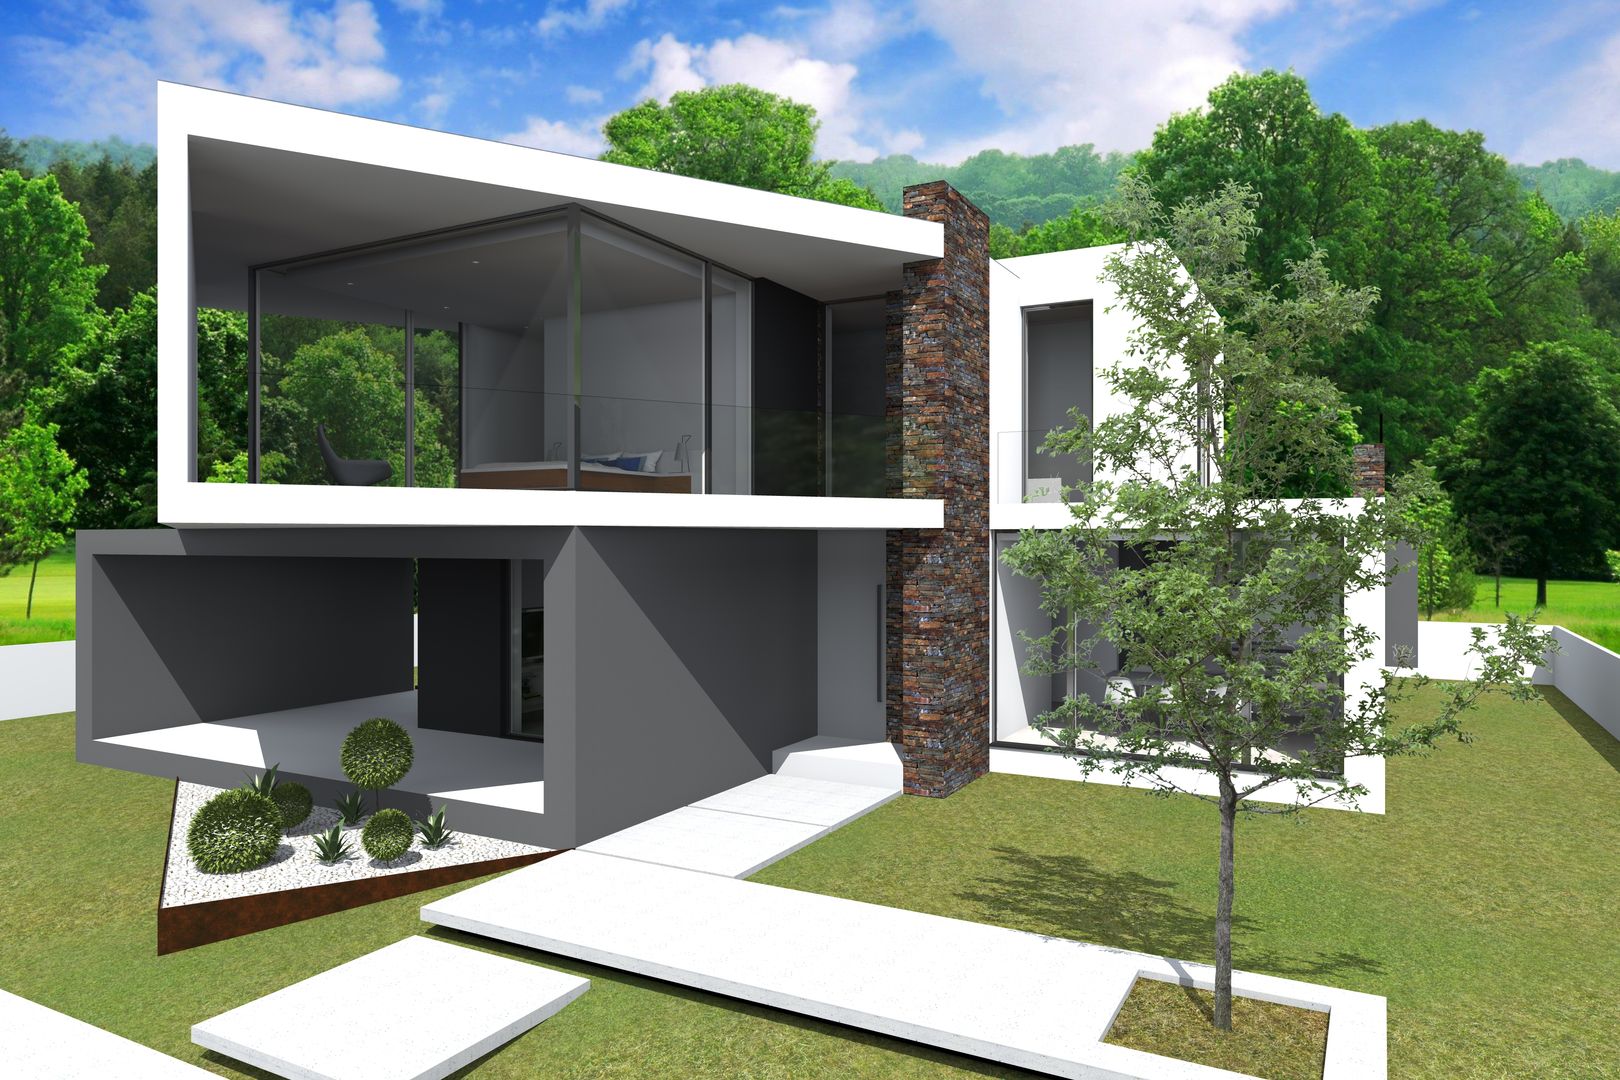 Projeto Jaspe, Magnific Home Lda Magnific Home Lda 現代房屋設計點子、靈感 & 圖片